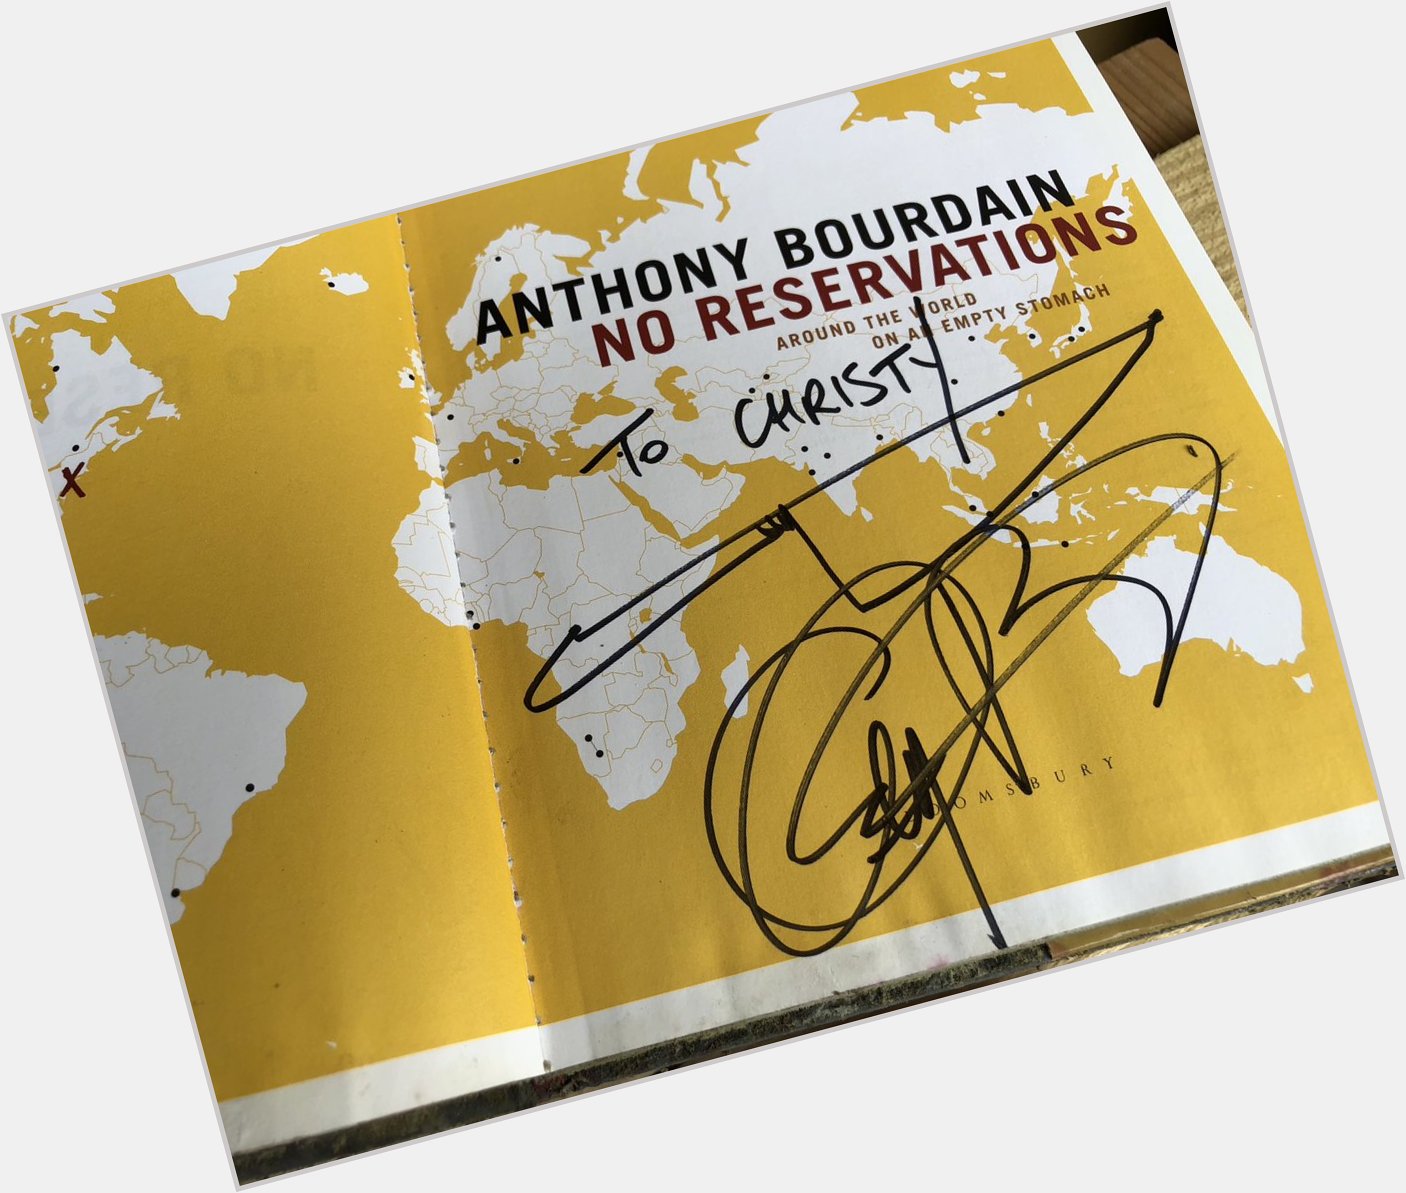 Happy heavenly birthday Anthony Bourdain I will treasure this forever. 